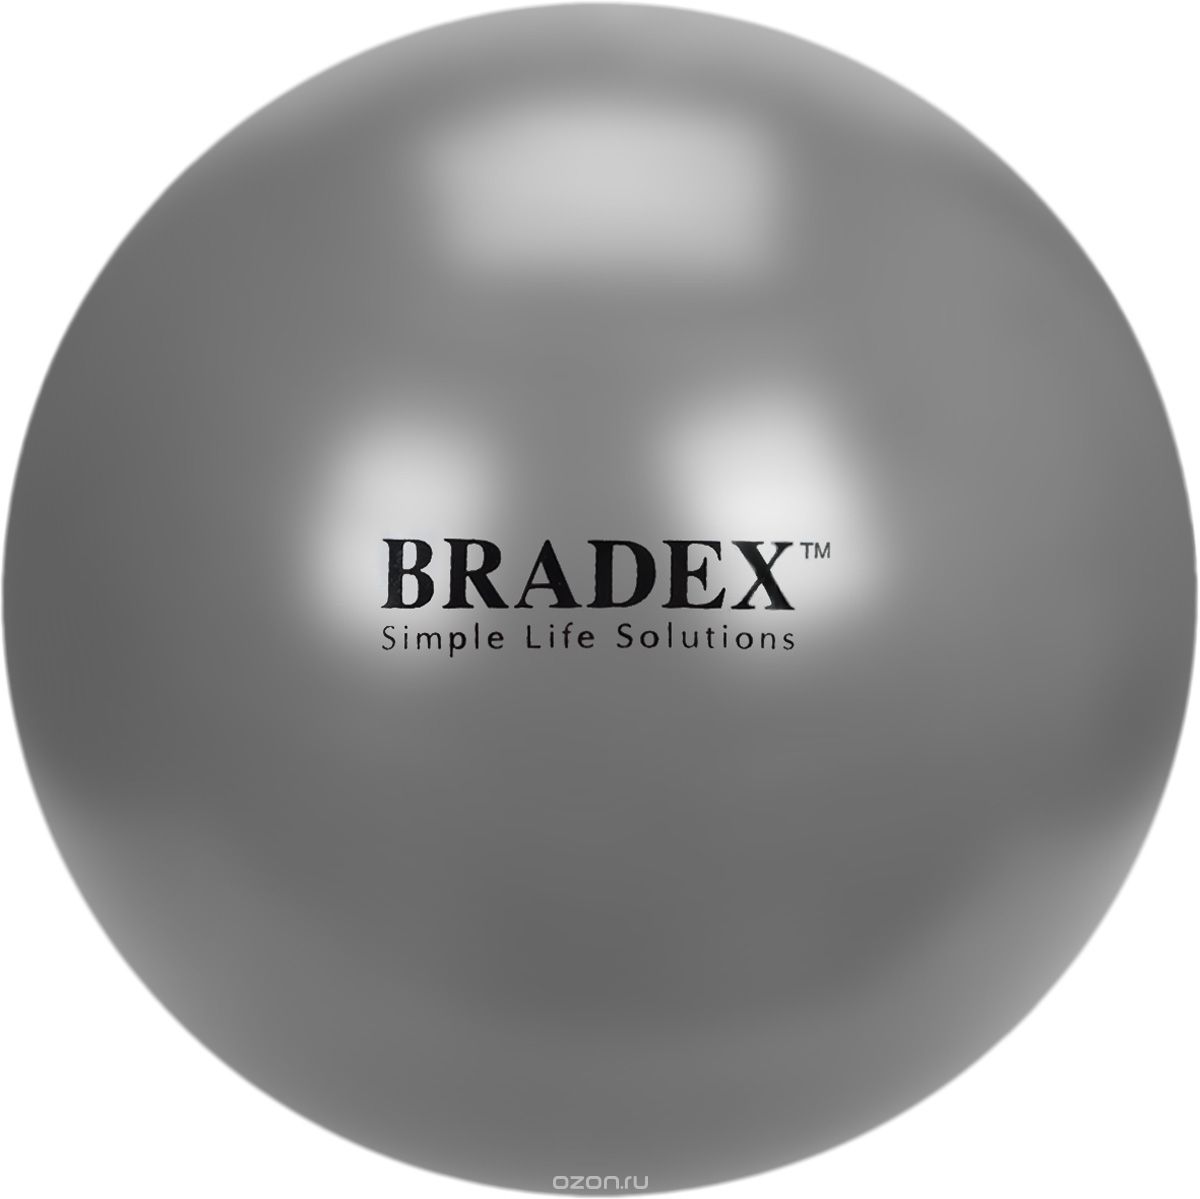    Bradex 